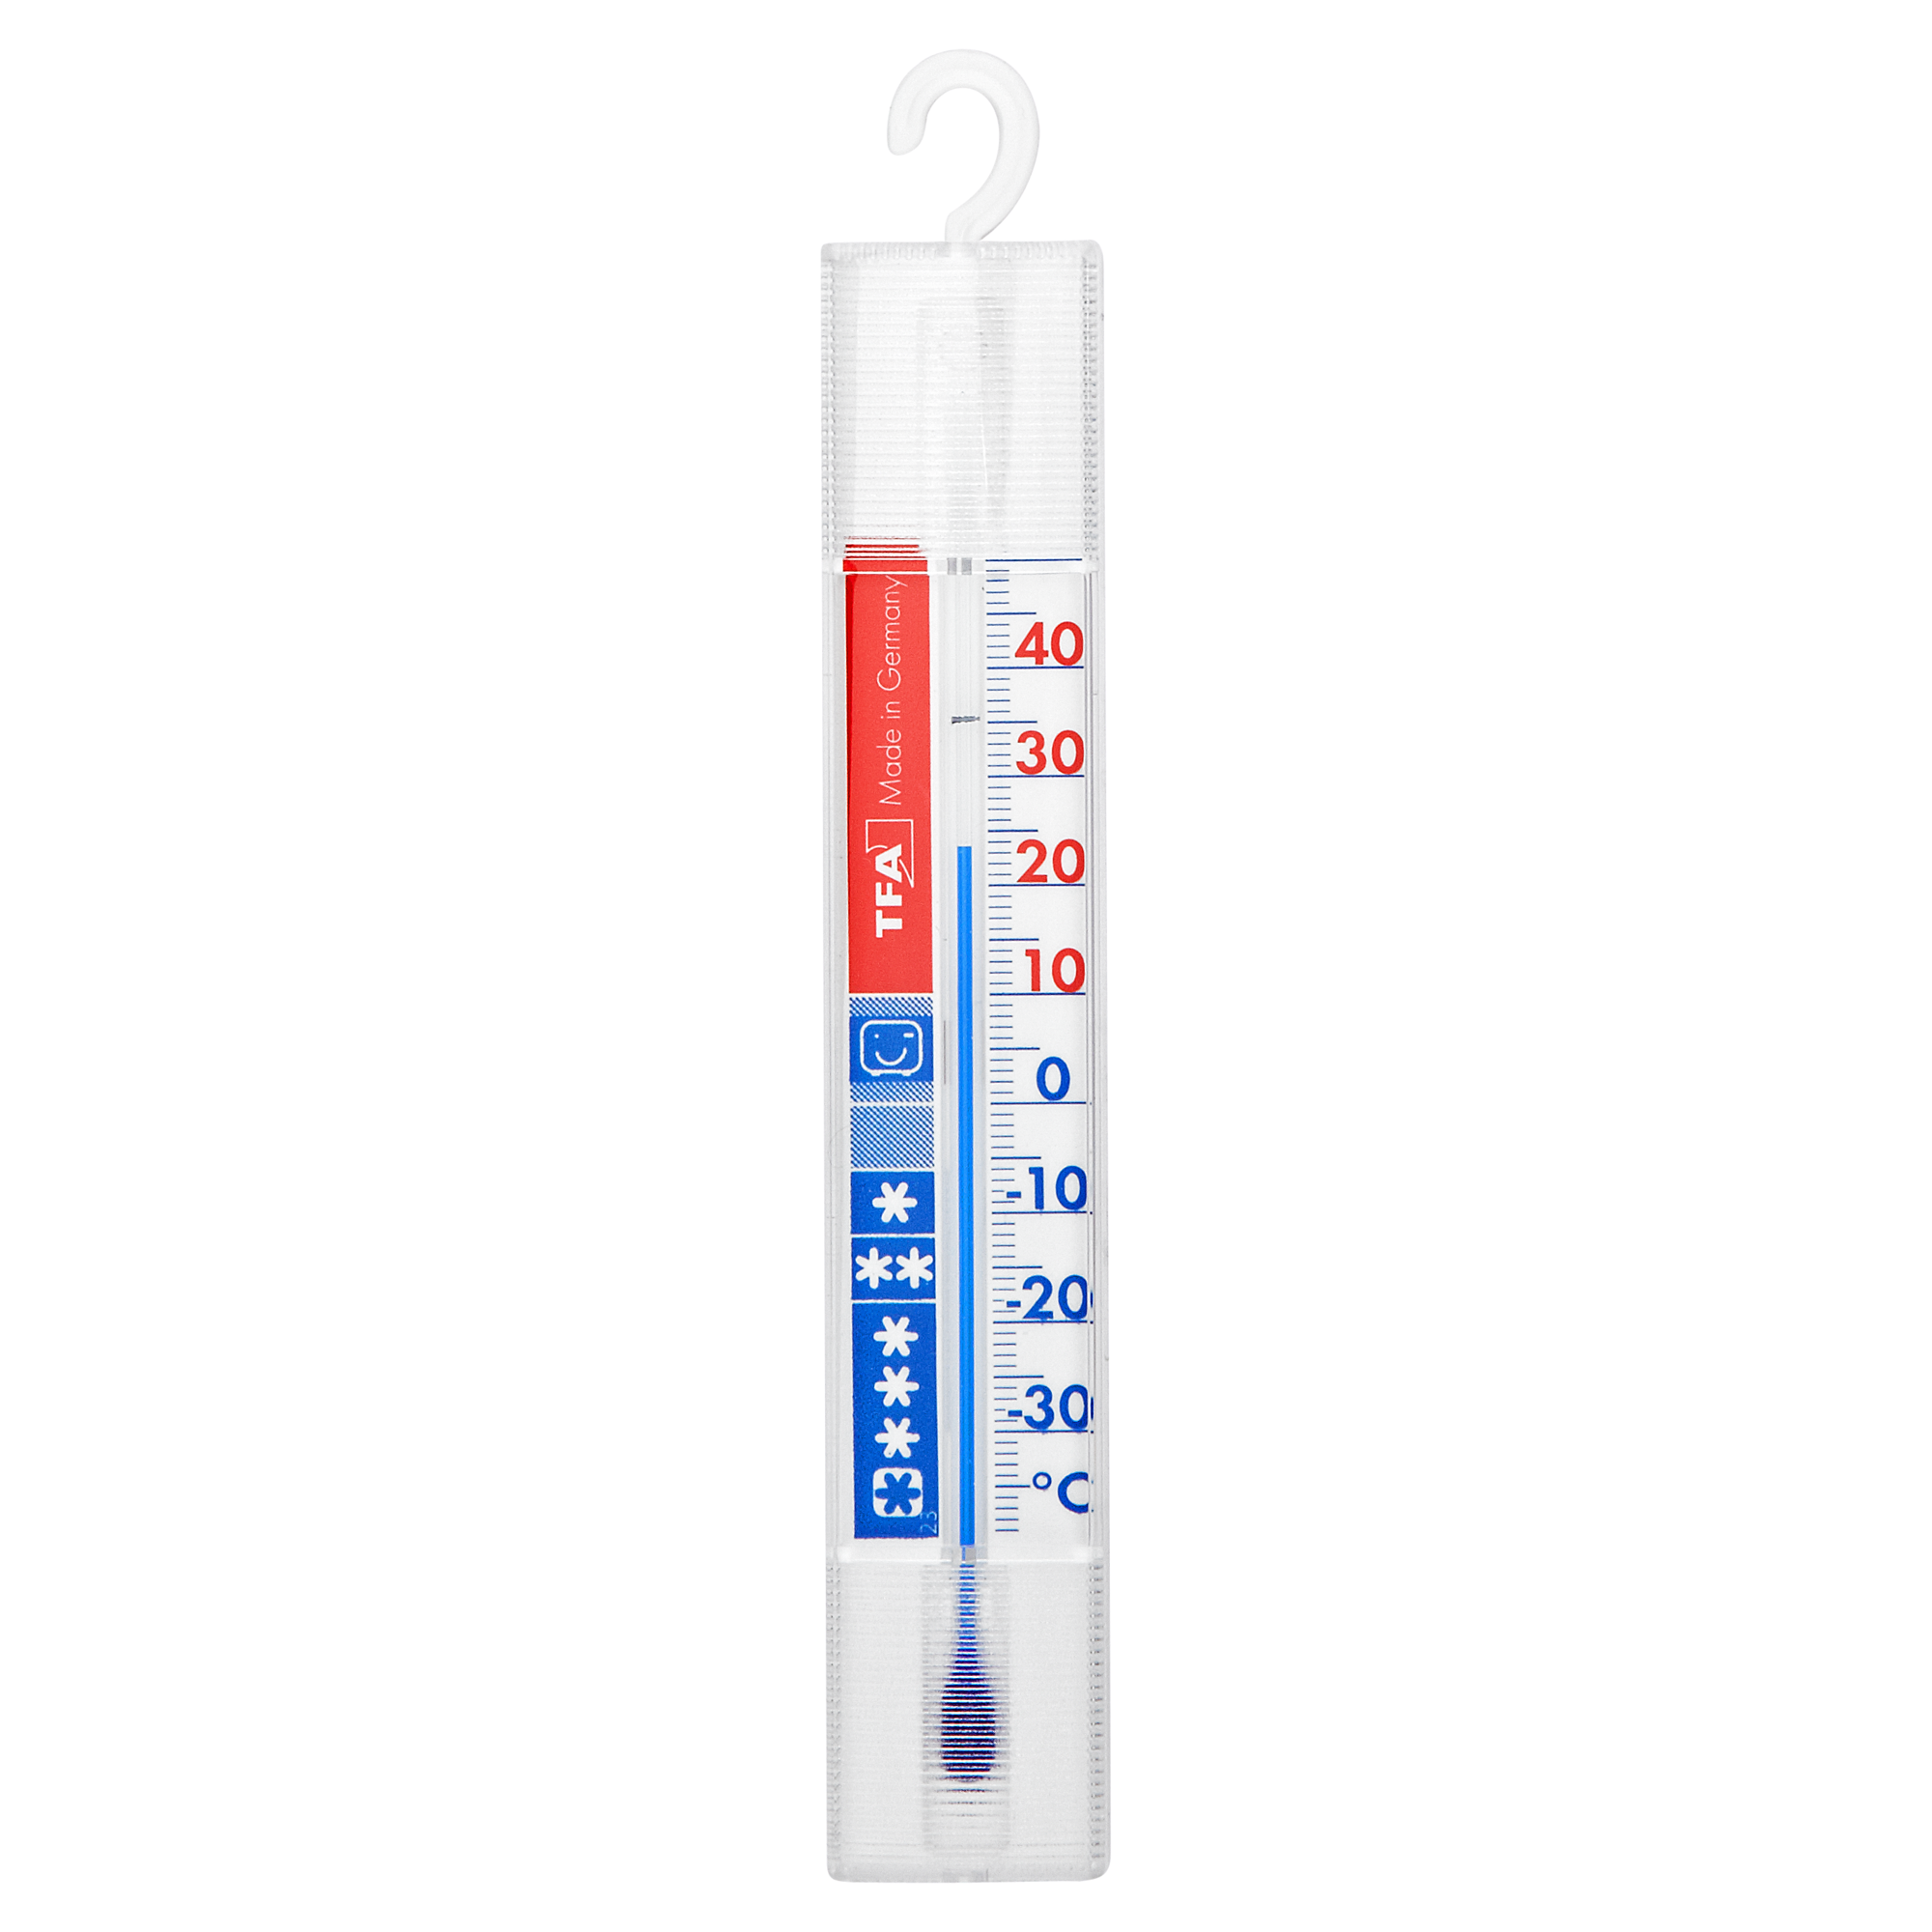 Kühlthermometer Kunststoff transparent 2,4 x 0,9 x 15,5 cm + product picture